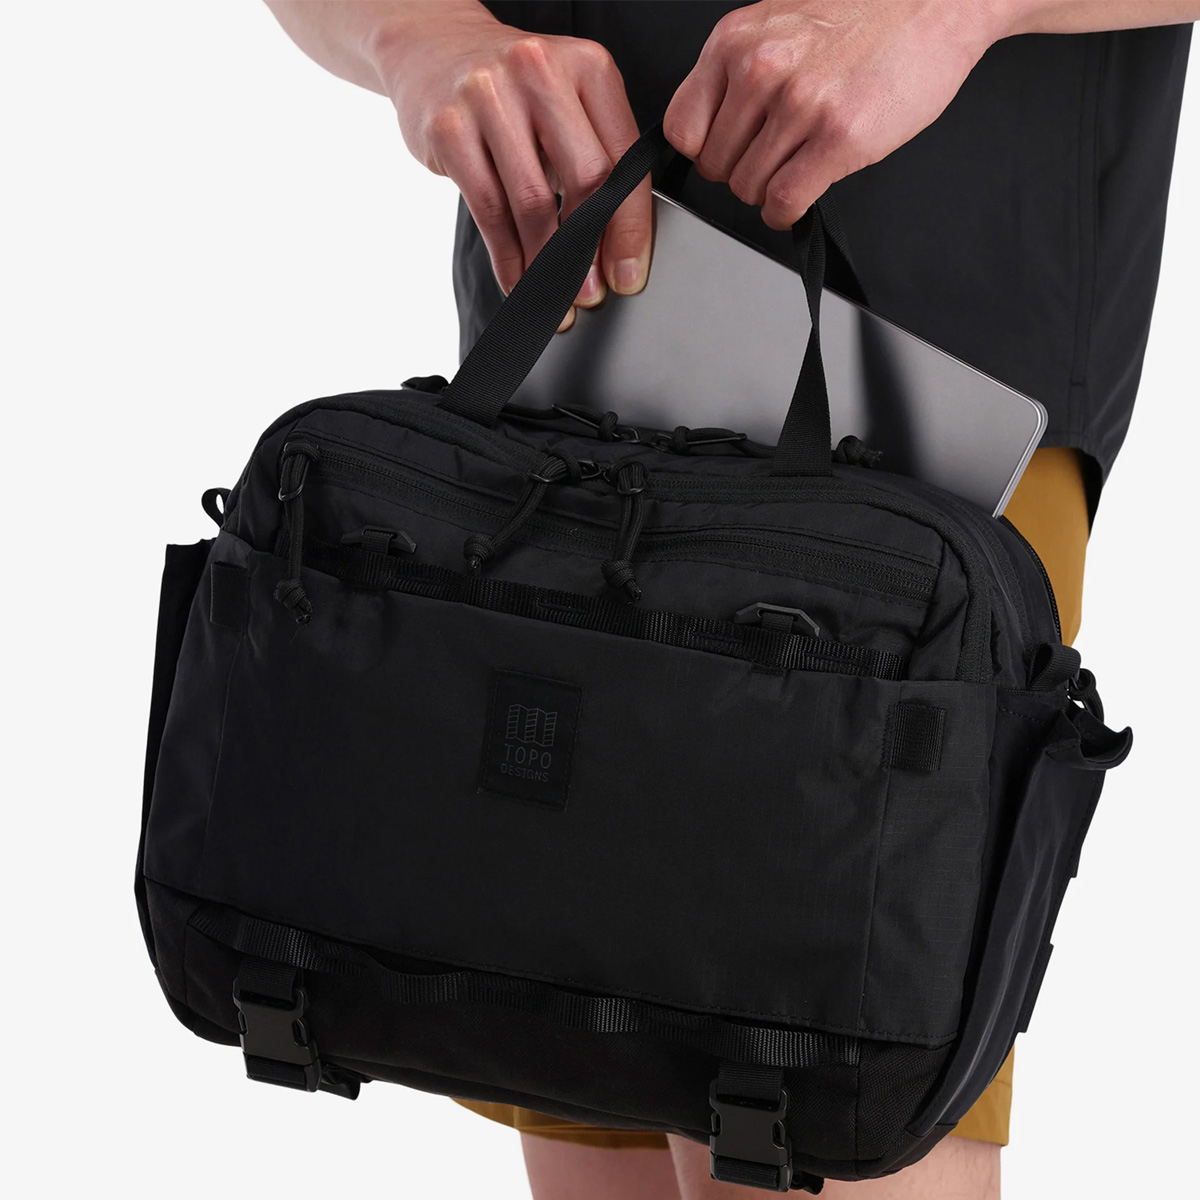 Topo Designs Mountain Cross Bag Black, with an internal laptop sleeve